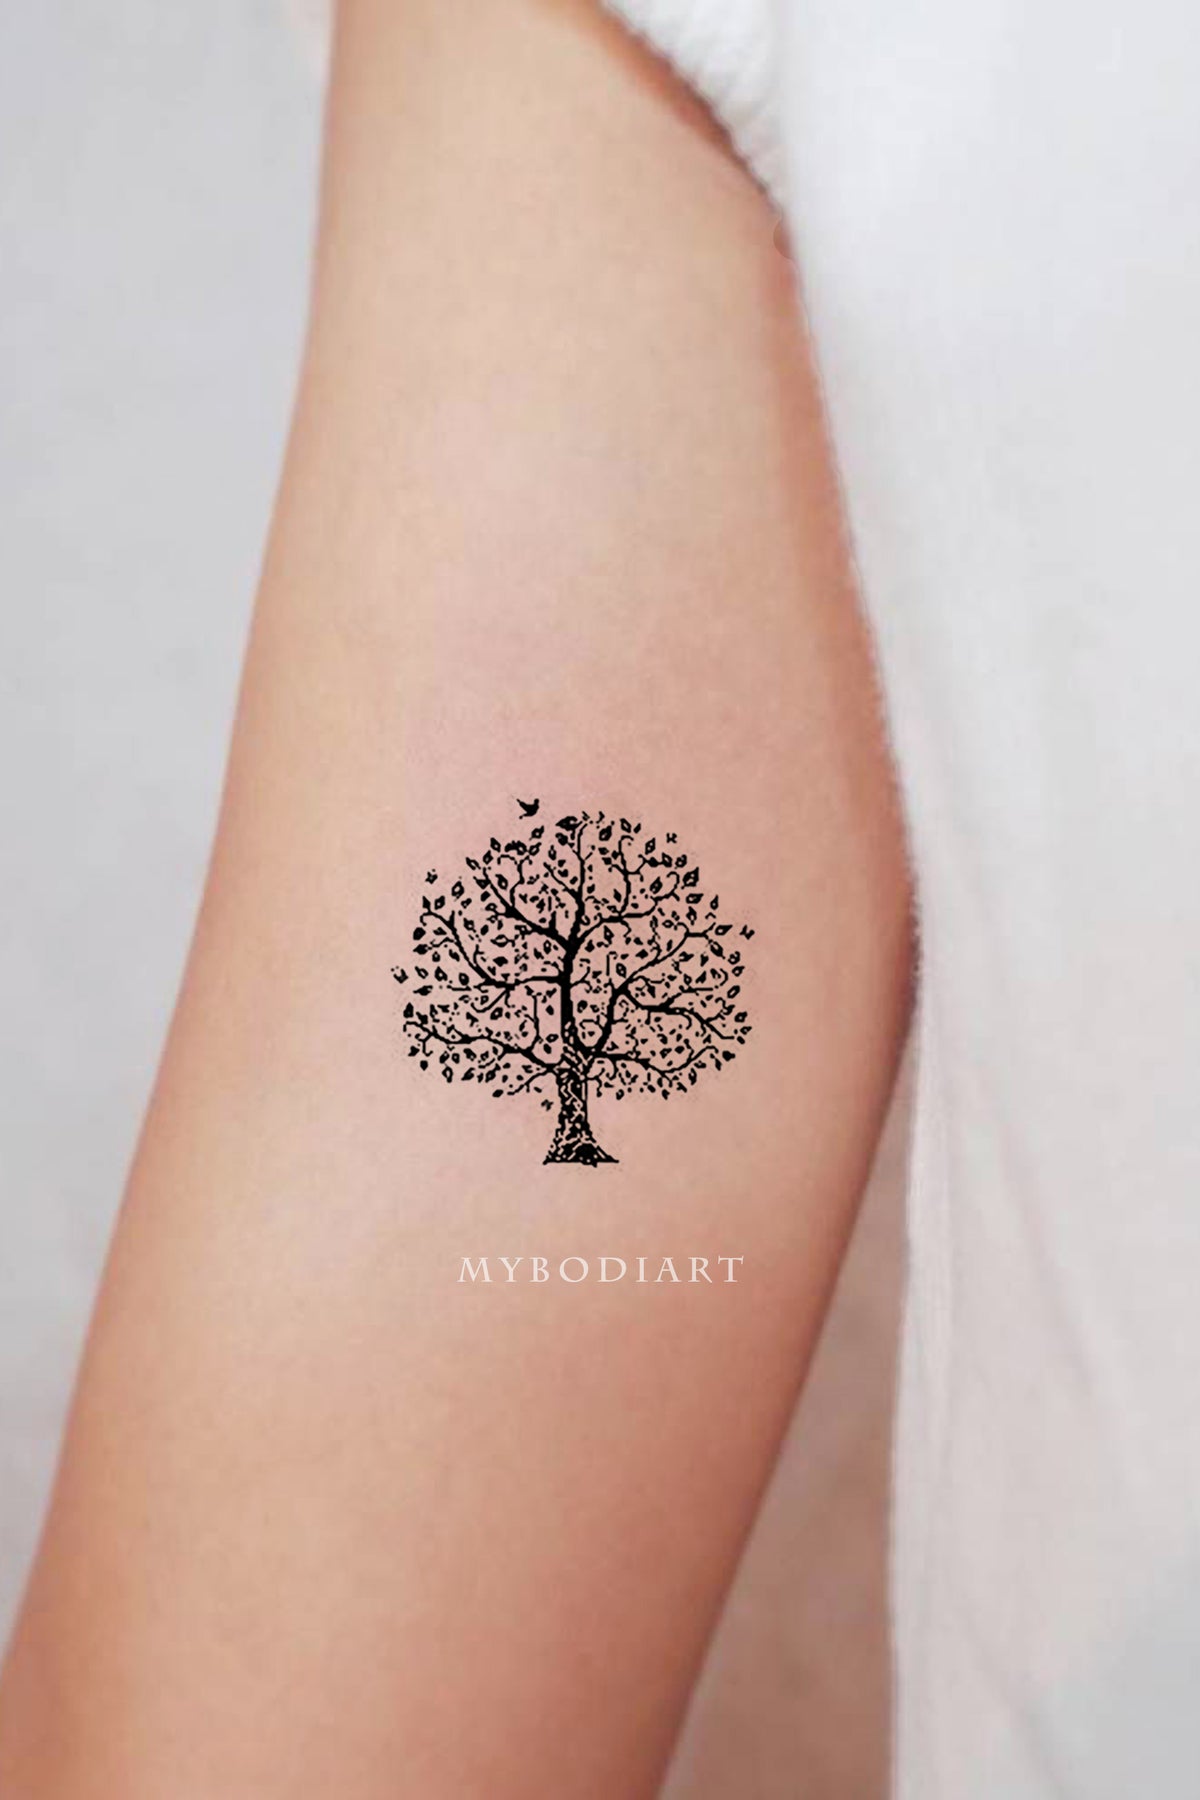 45 Inspirational Forest Tattoo Ideas  Art and Design